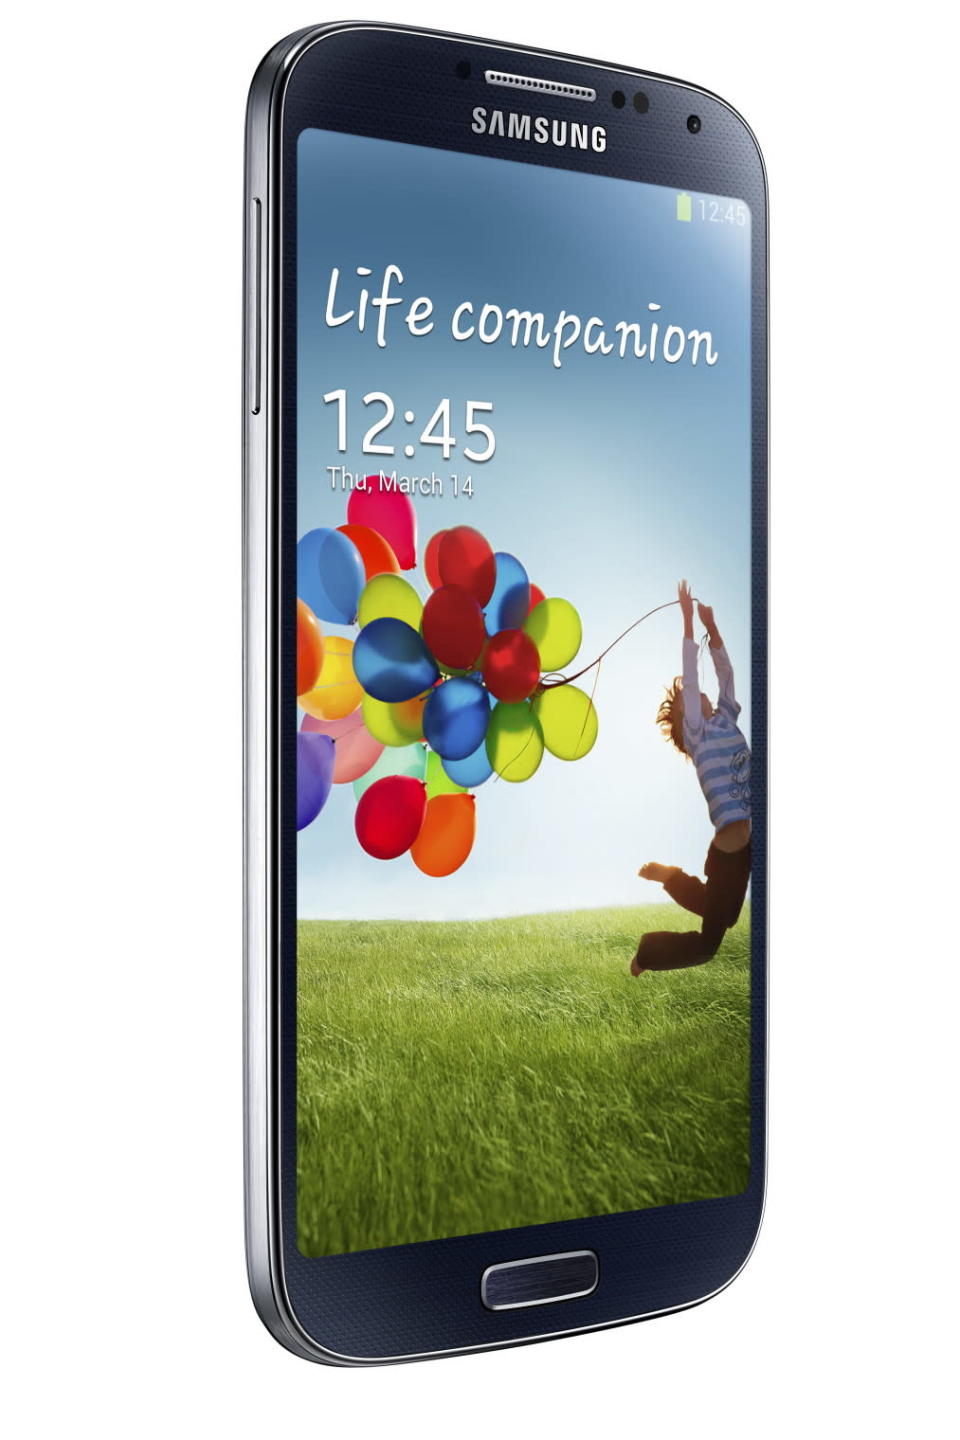 Samsung unveils Galaxy S4 with 8-core processor, 13MP camera